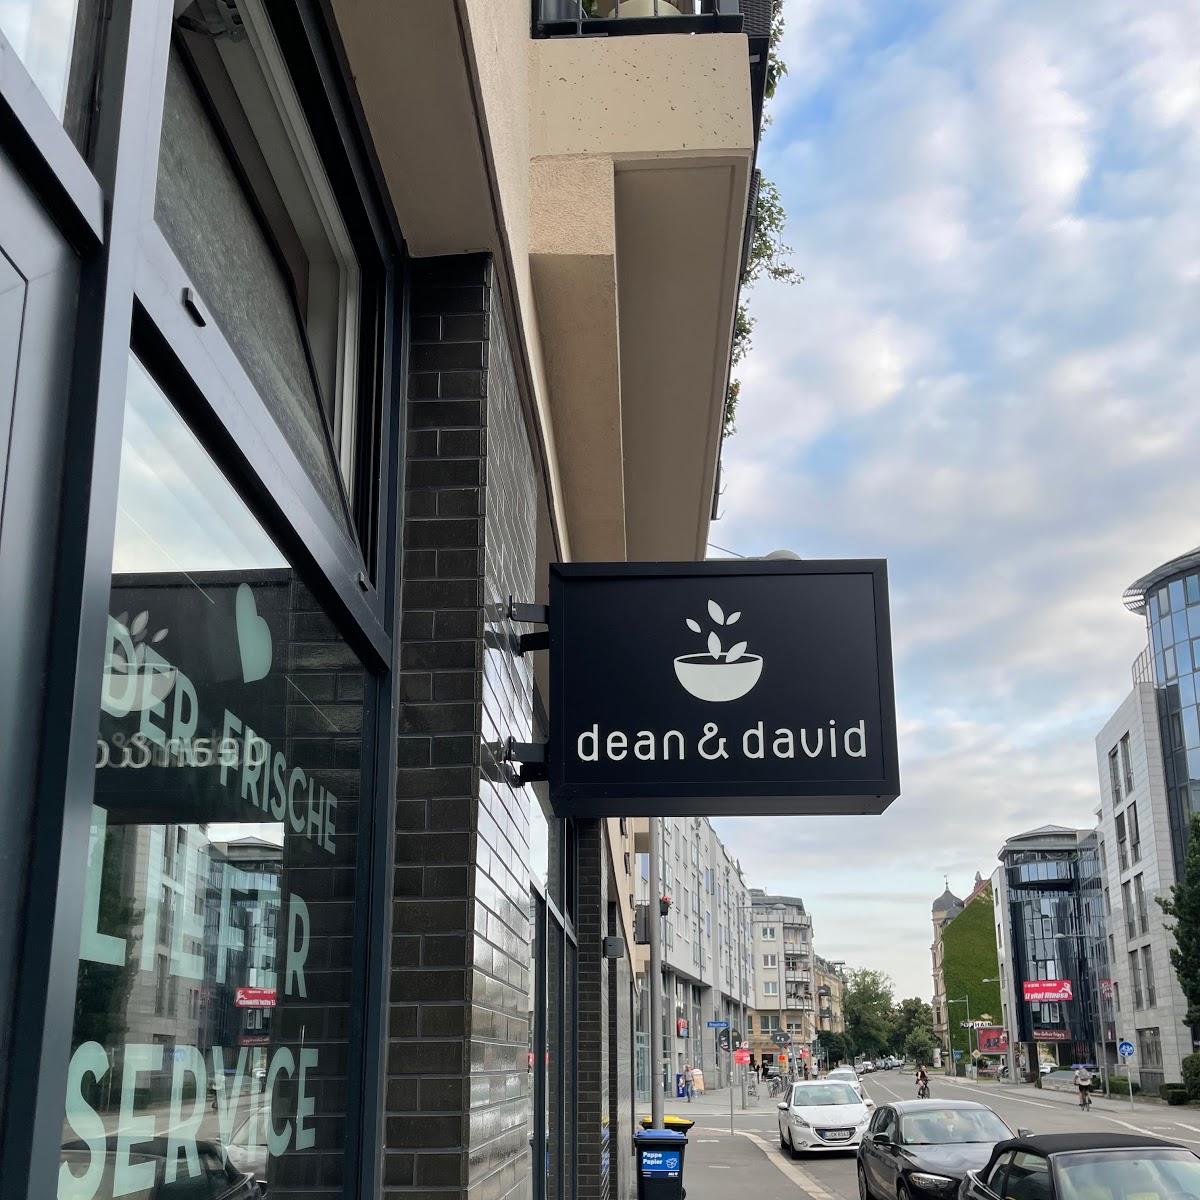 Restaurant "dean&david - Pickup & Lieferdienst" in Leipzig